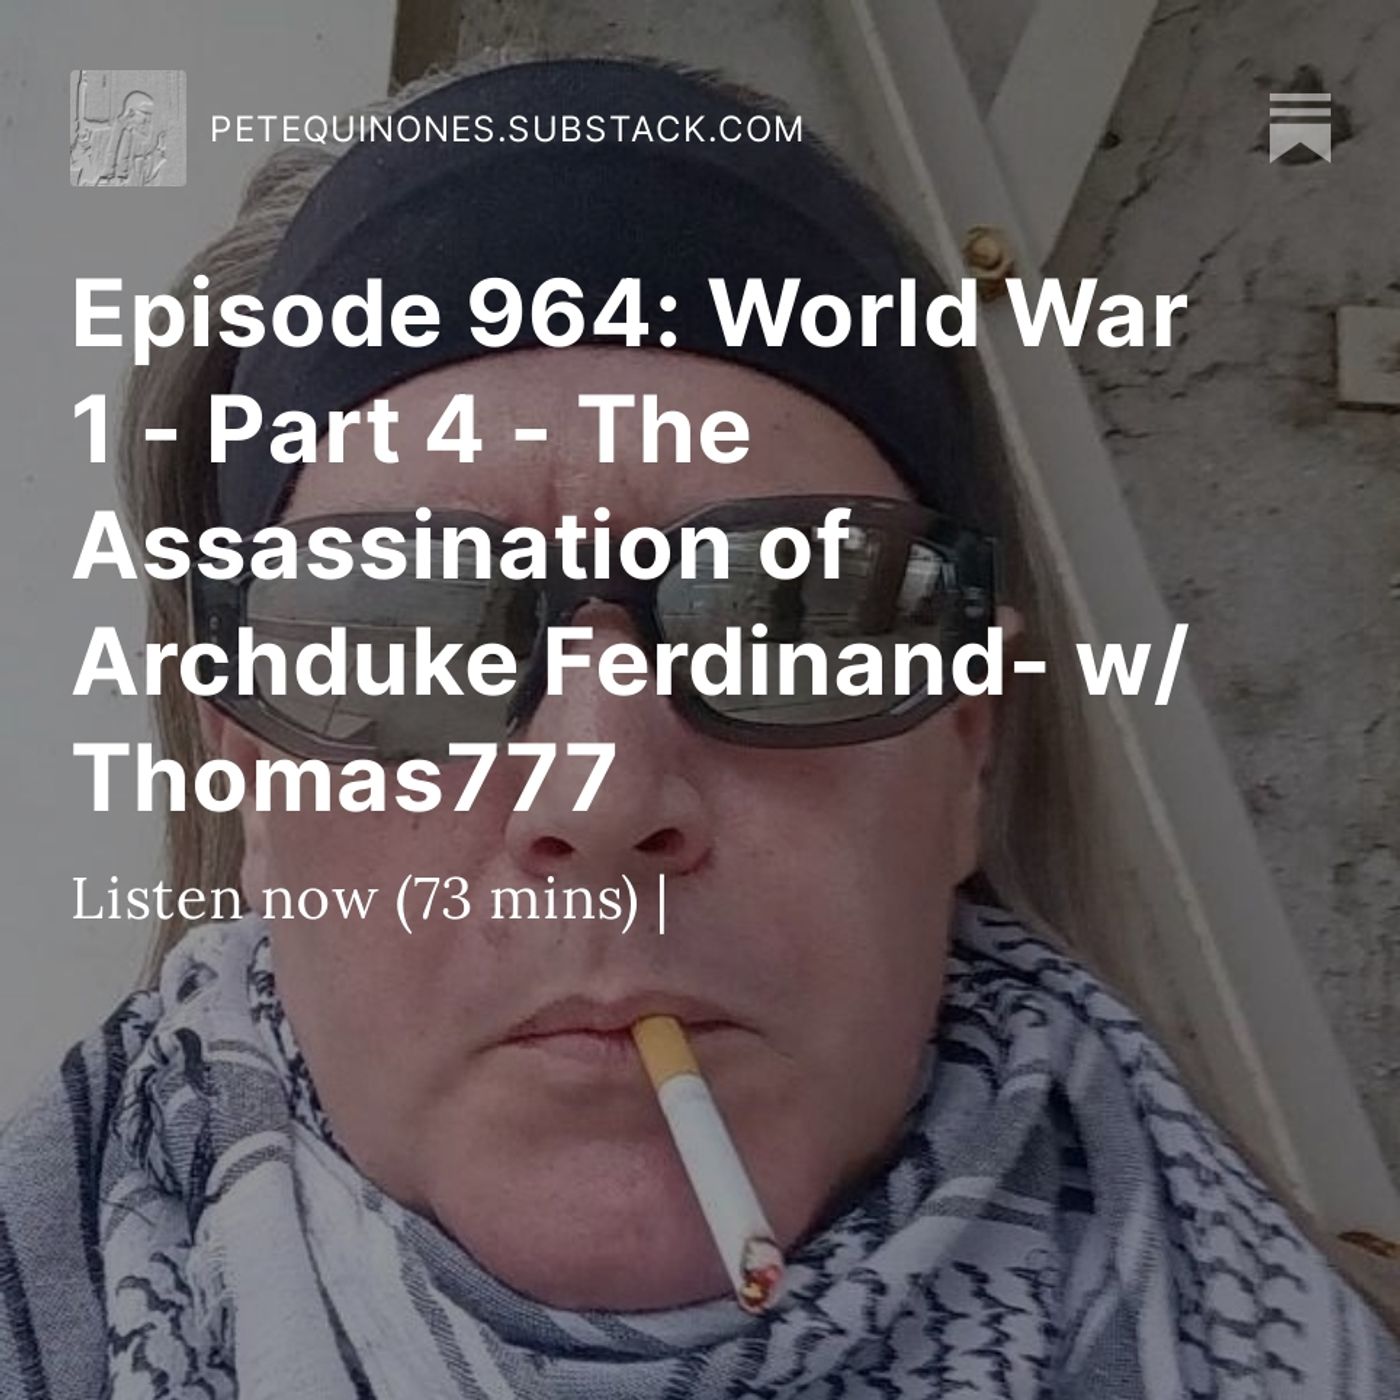 Episode 964: World War 1 - Part 4 - The Assassination of Archduke Ferdinand- w/ Thomas777